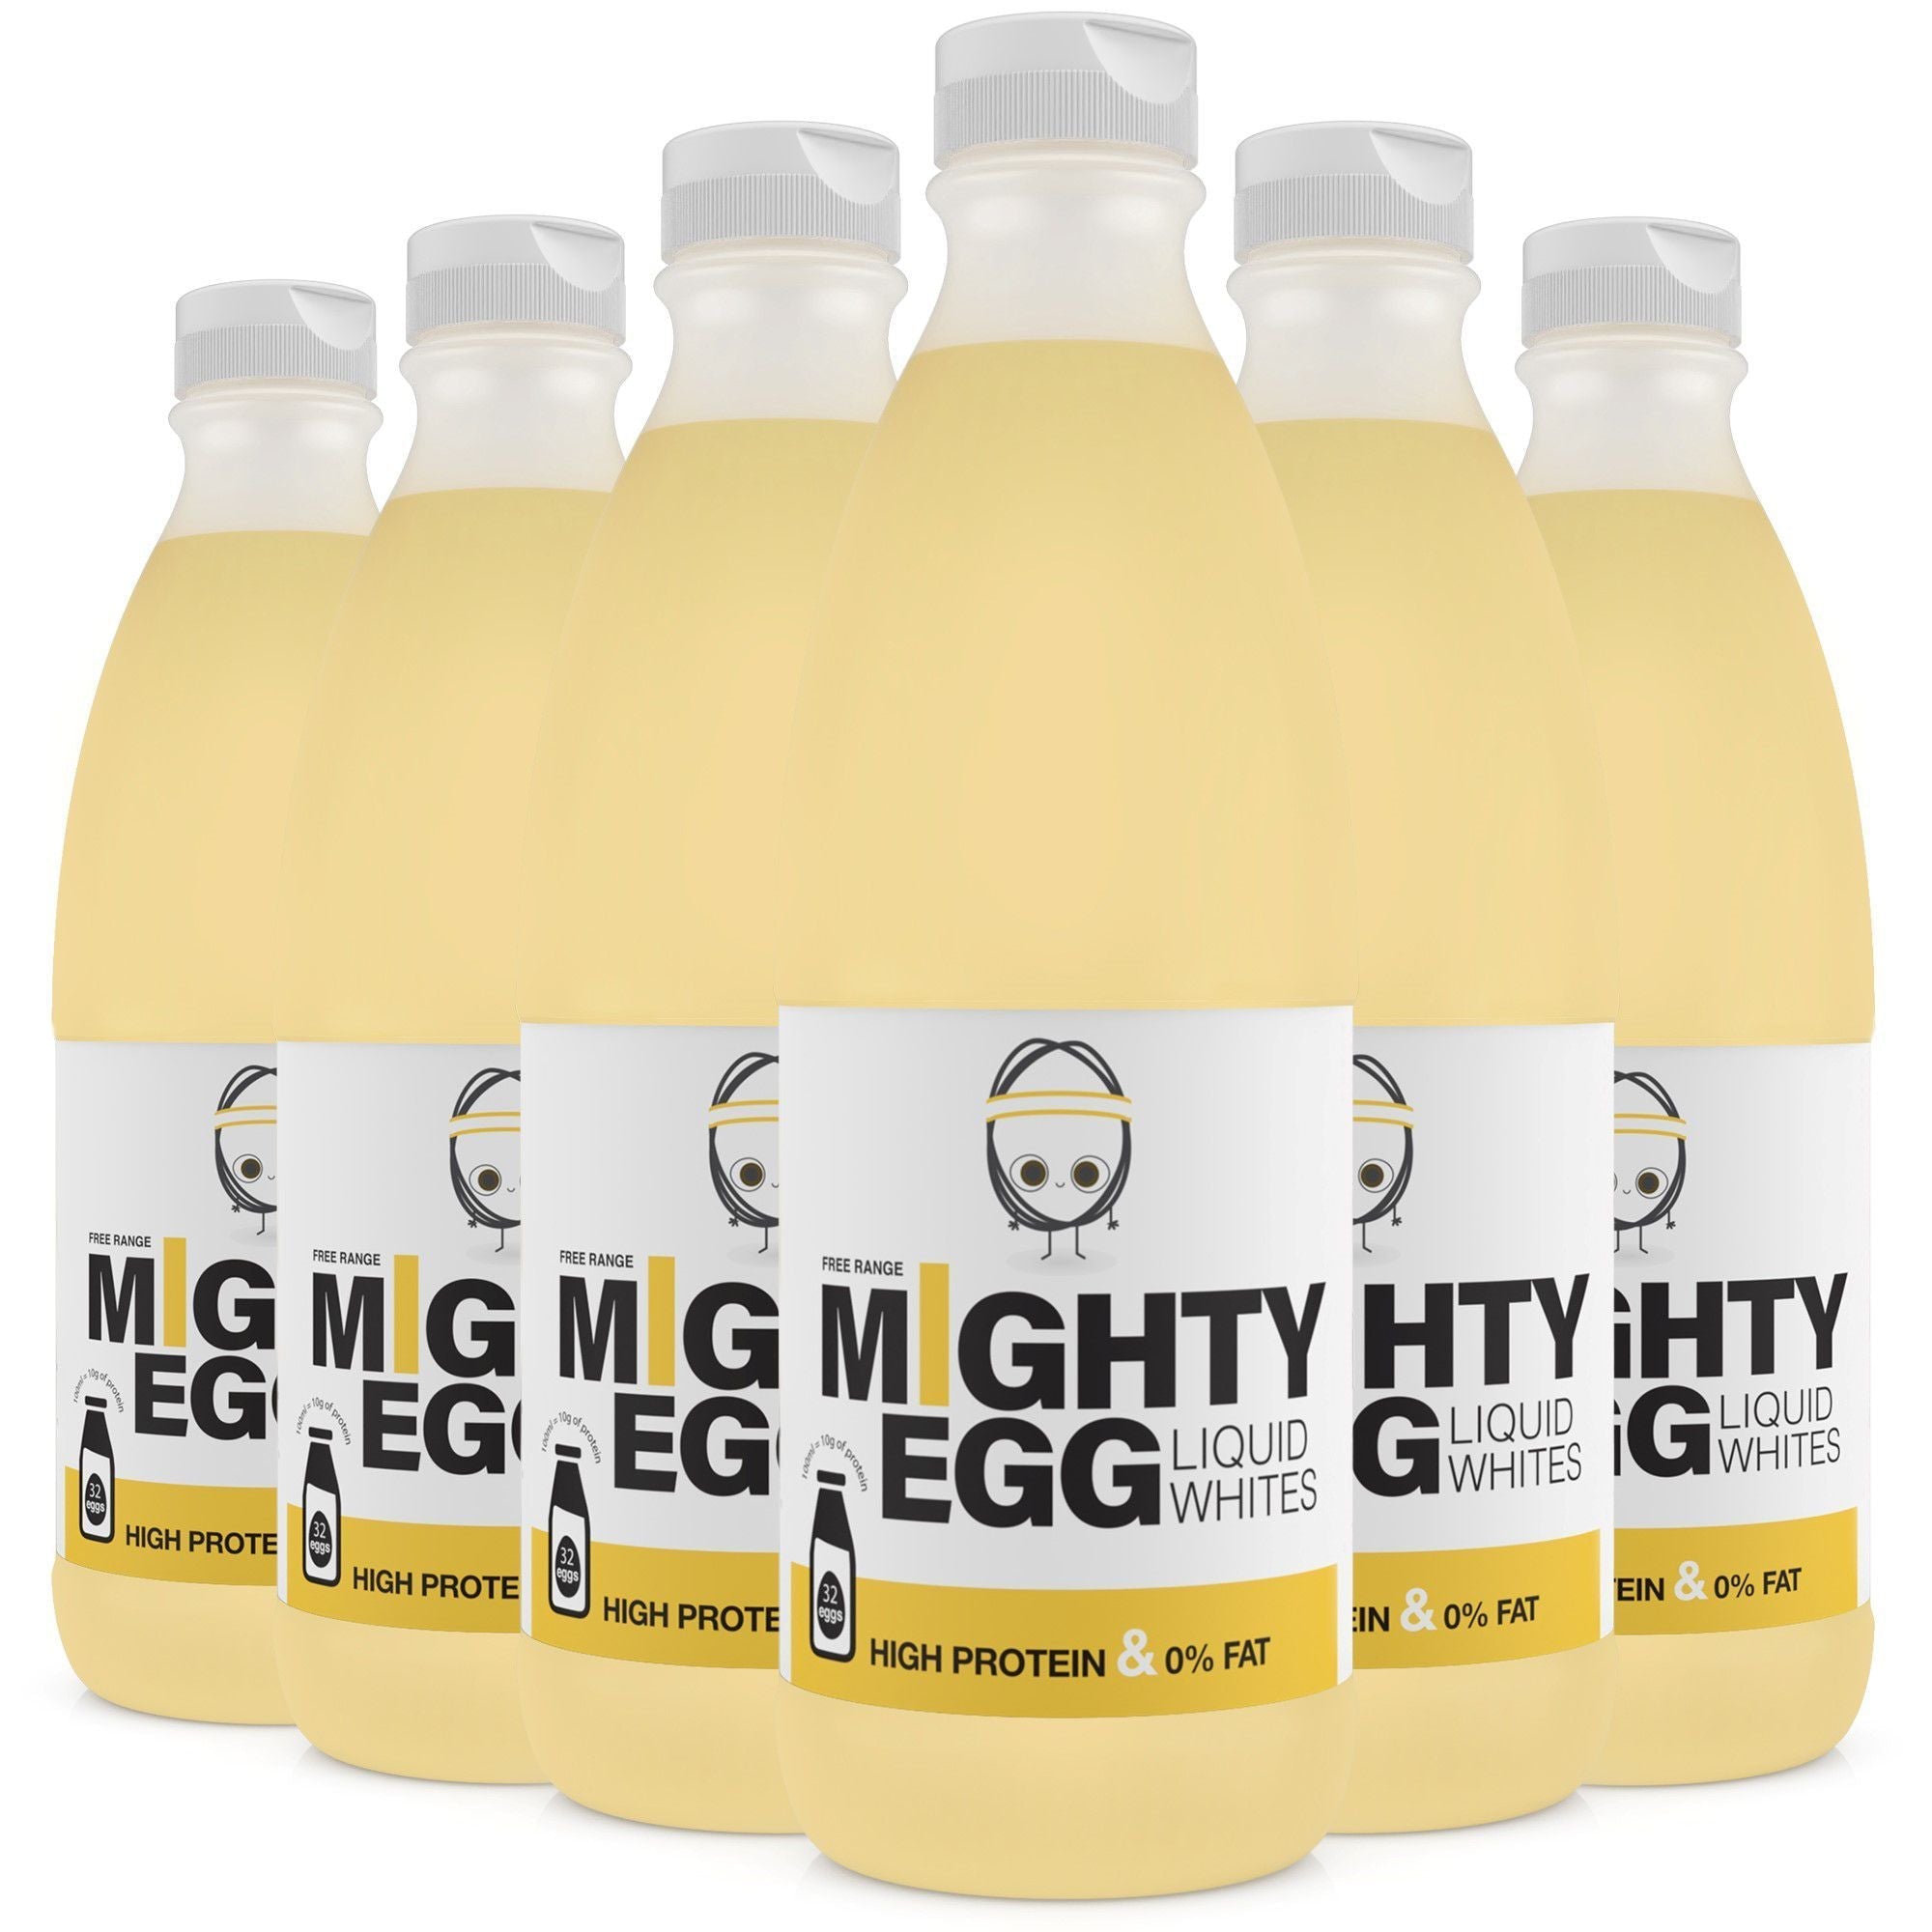 Mighty Egg - Liquid Whites 1litre - Full Boar Sports